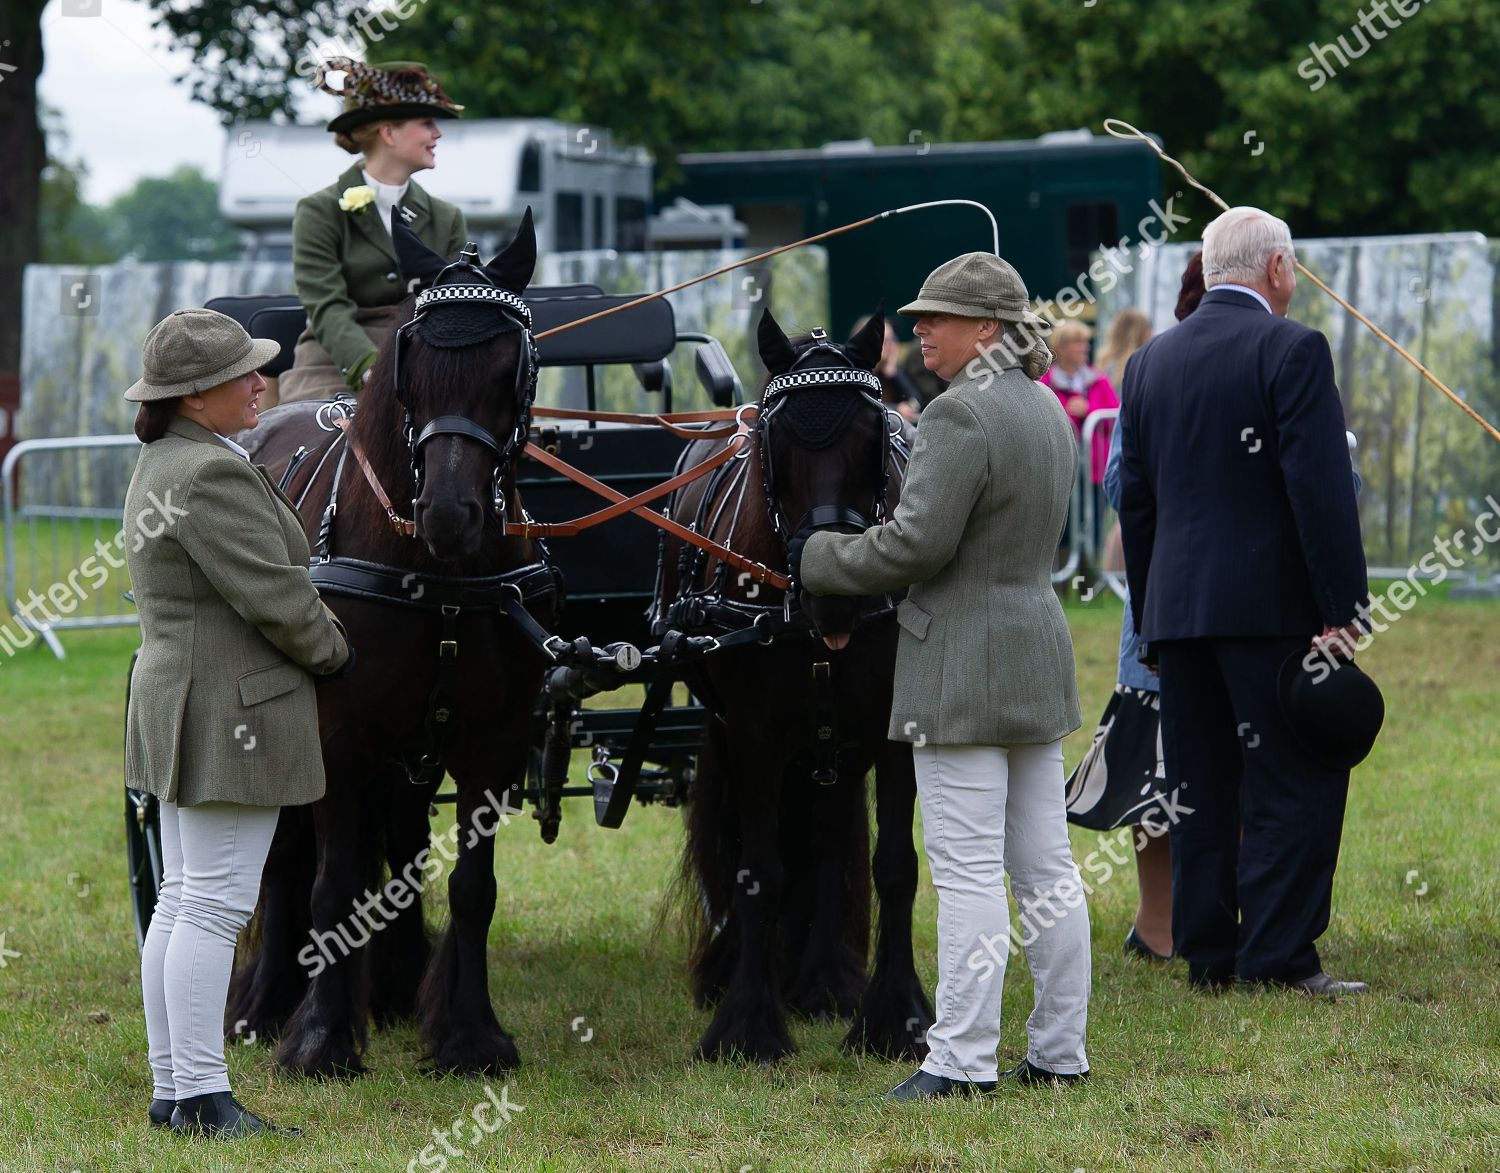 royal-windsor-horse-show-day-3-berkshire-uk-shutterstock-editorial-12195342ah.jpg